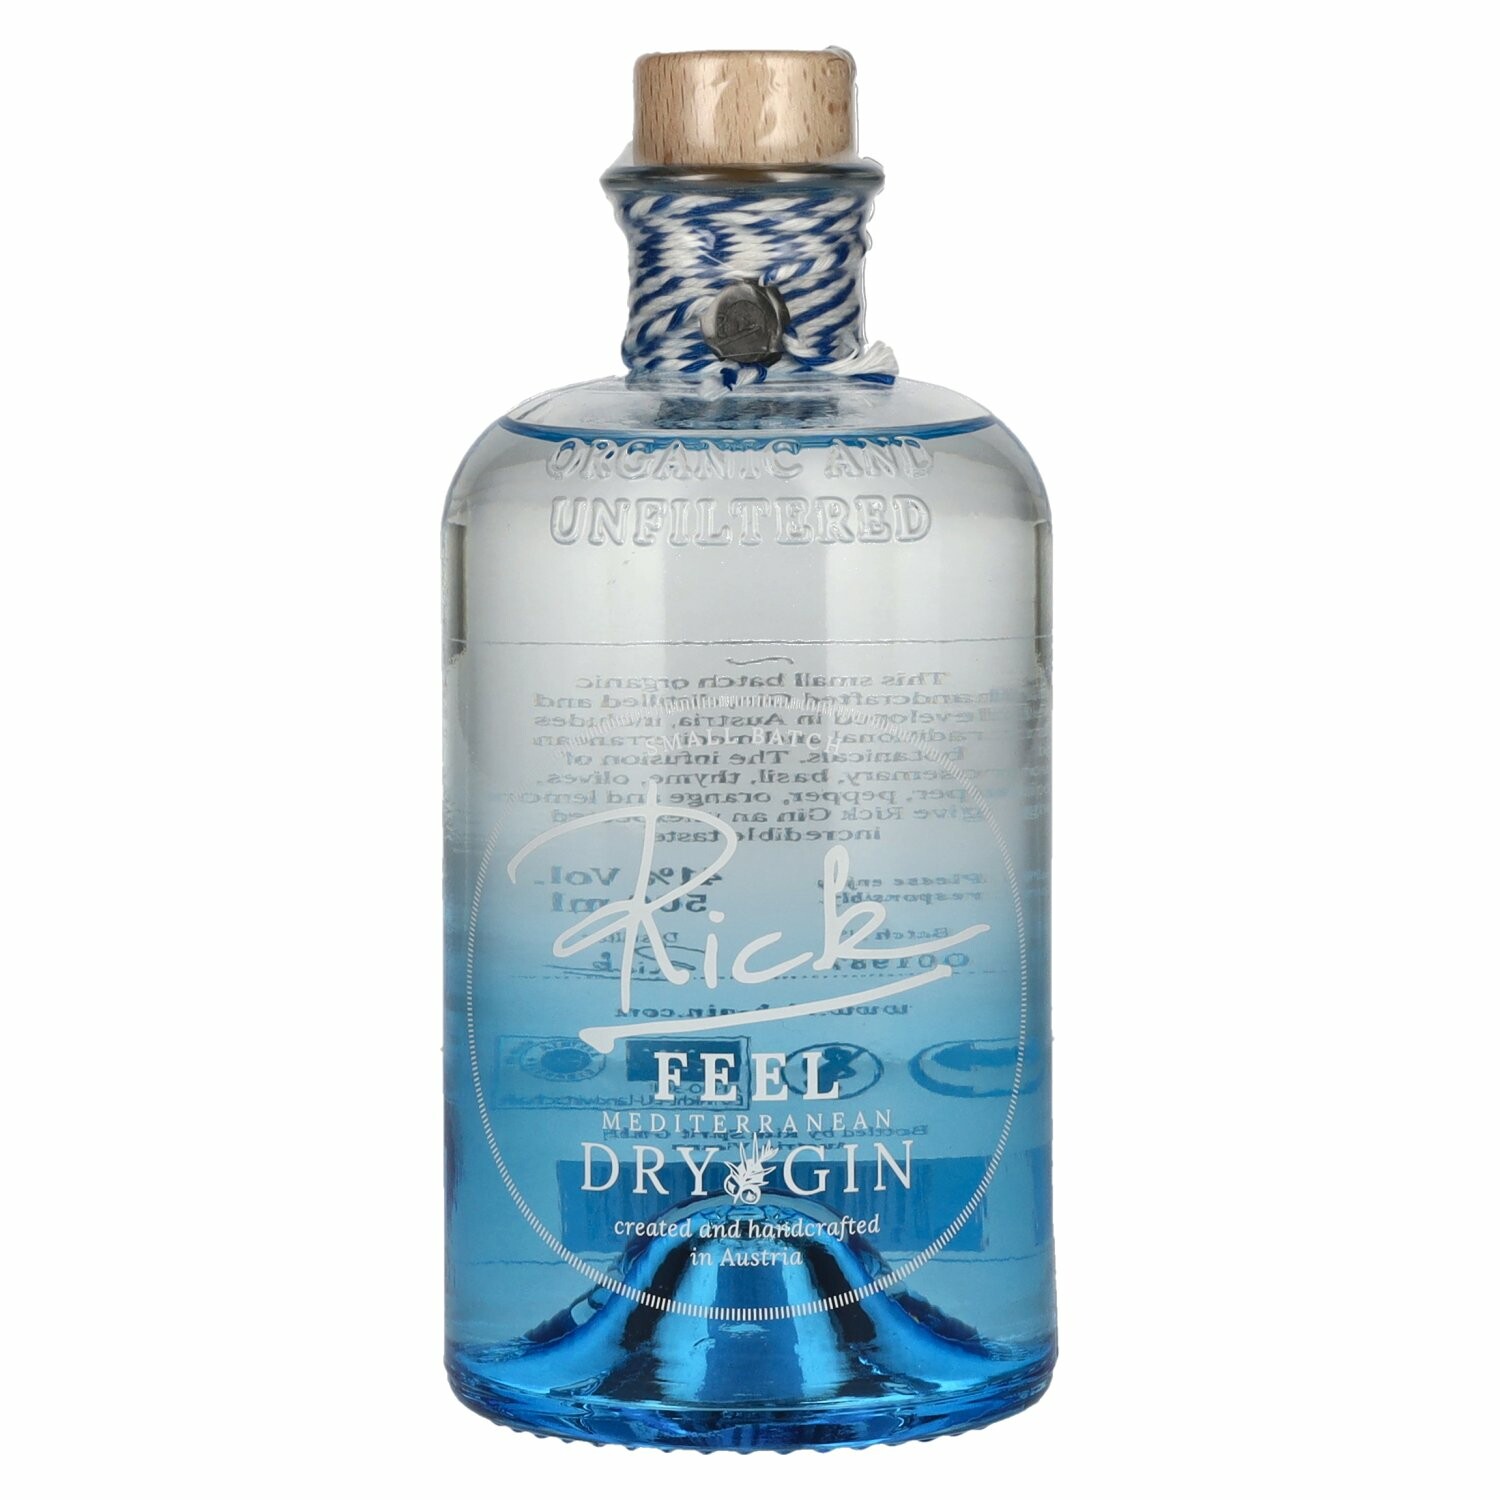 Rick FEEL Mediterranean Dry Gin 41% Vol. 0,5l